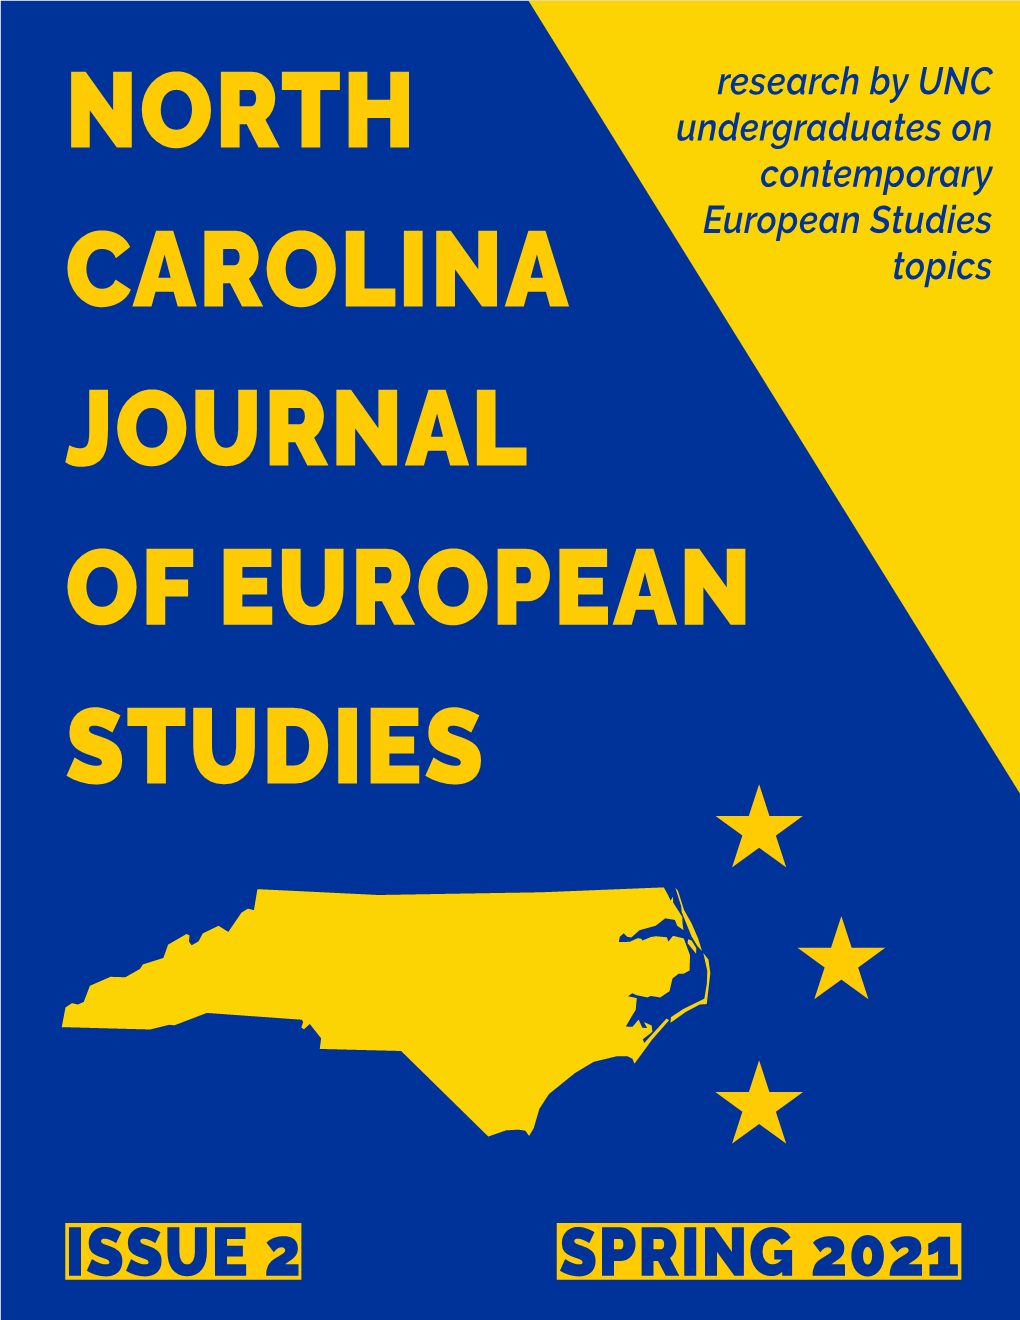 North Carolina Journal Studies of European